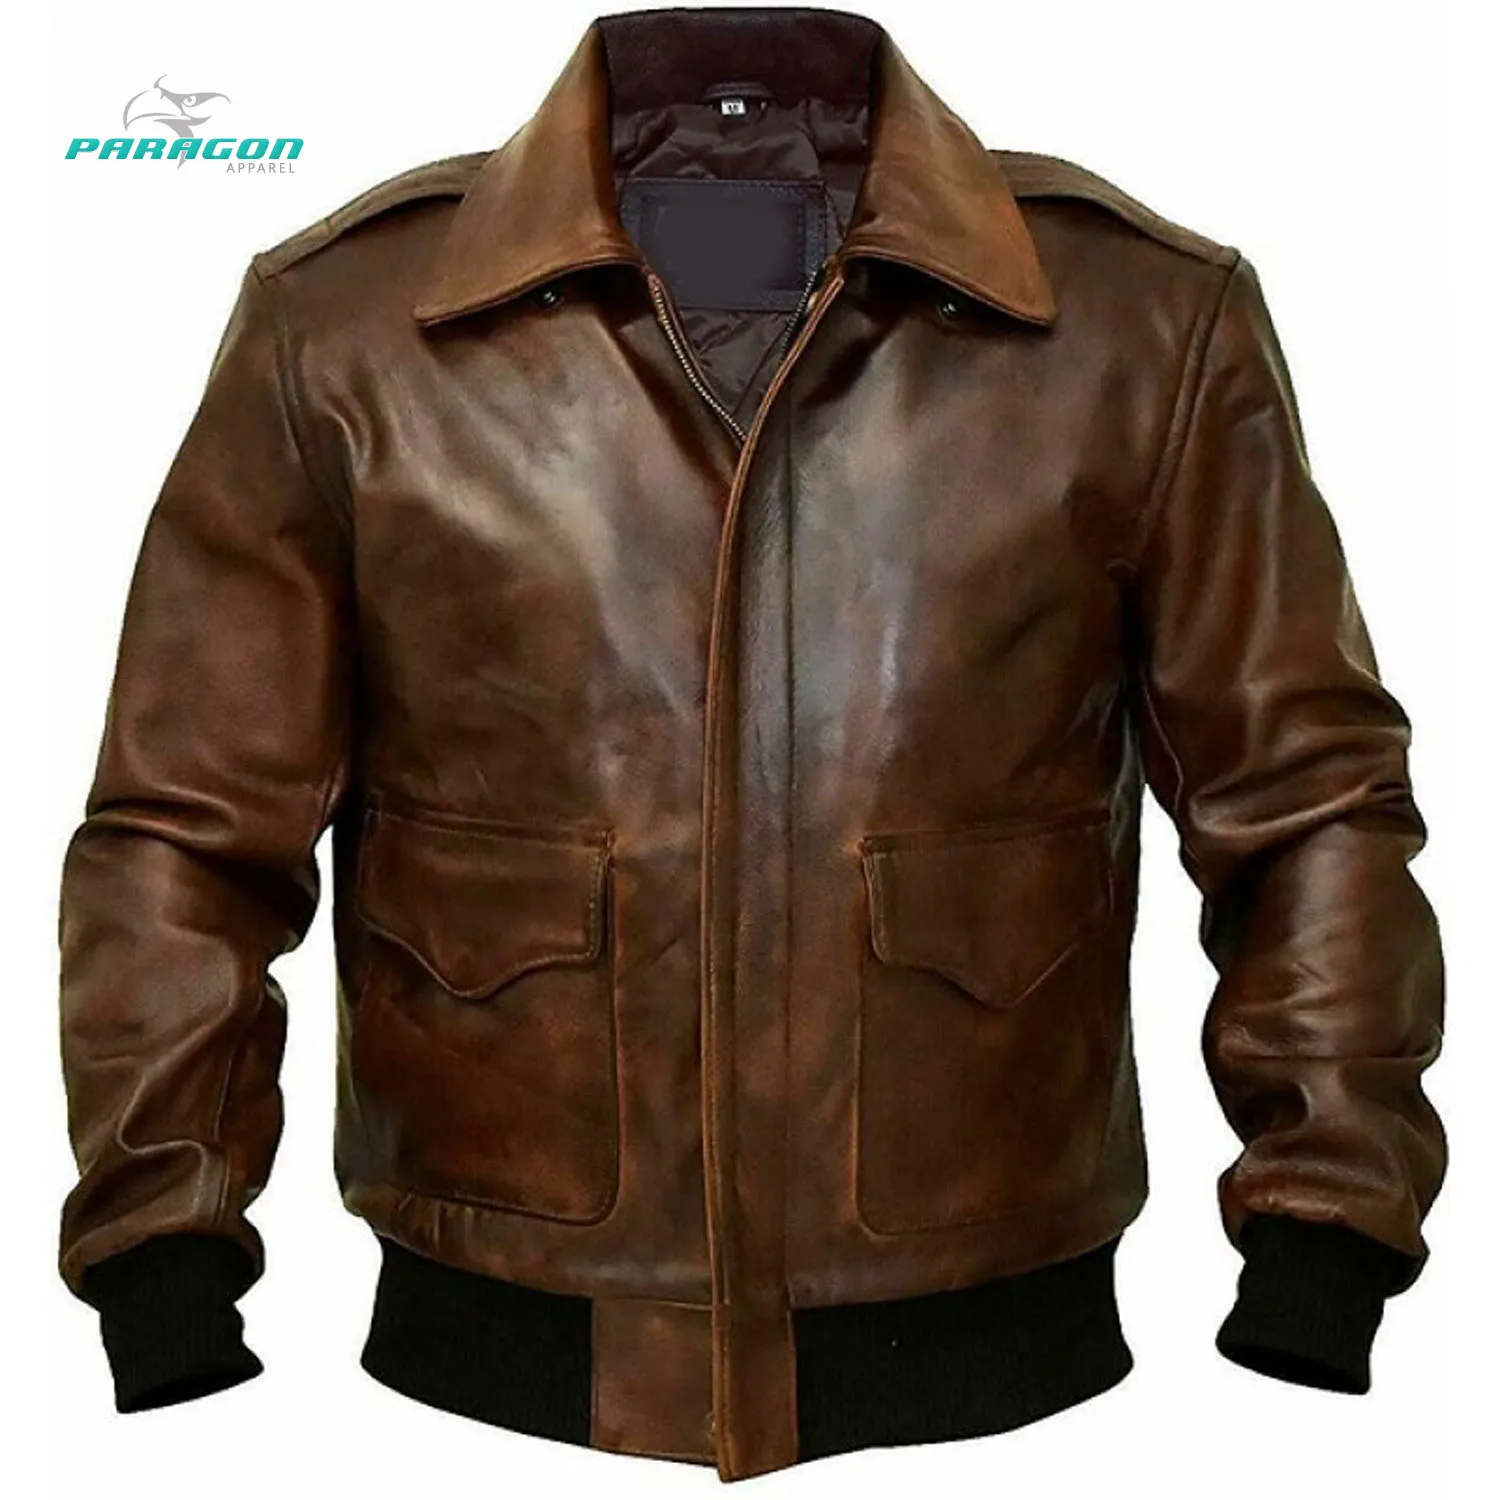 New style hip hop best design slim  fit black men leather jacket,top quality very stylish fashionable latest leather jacket